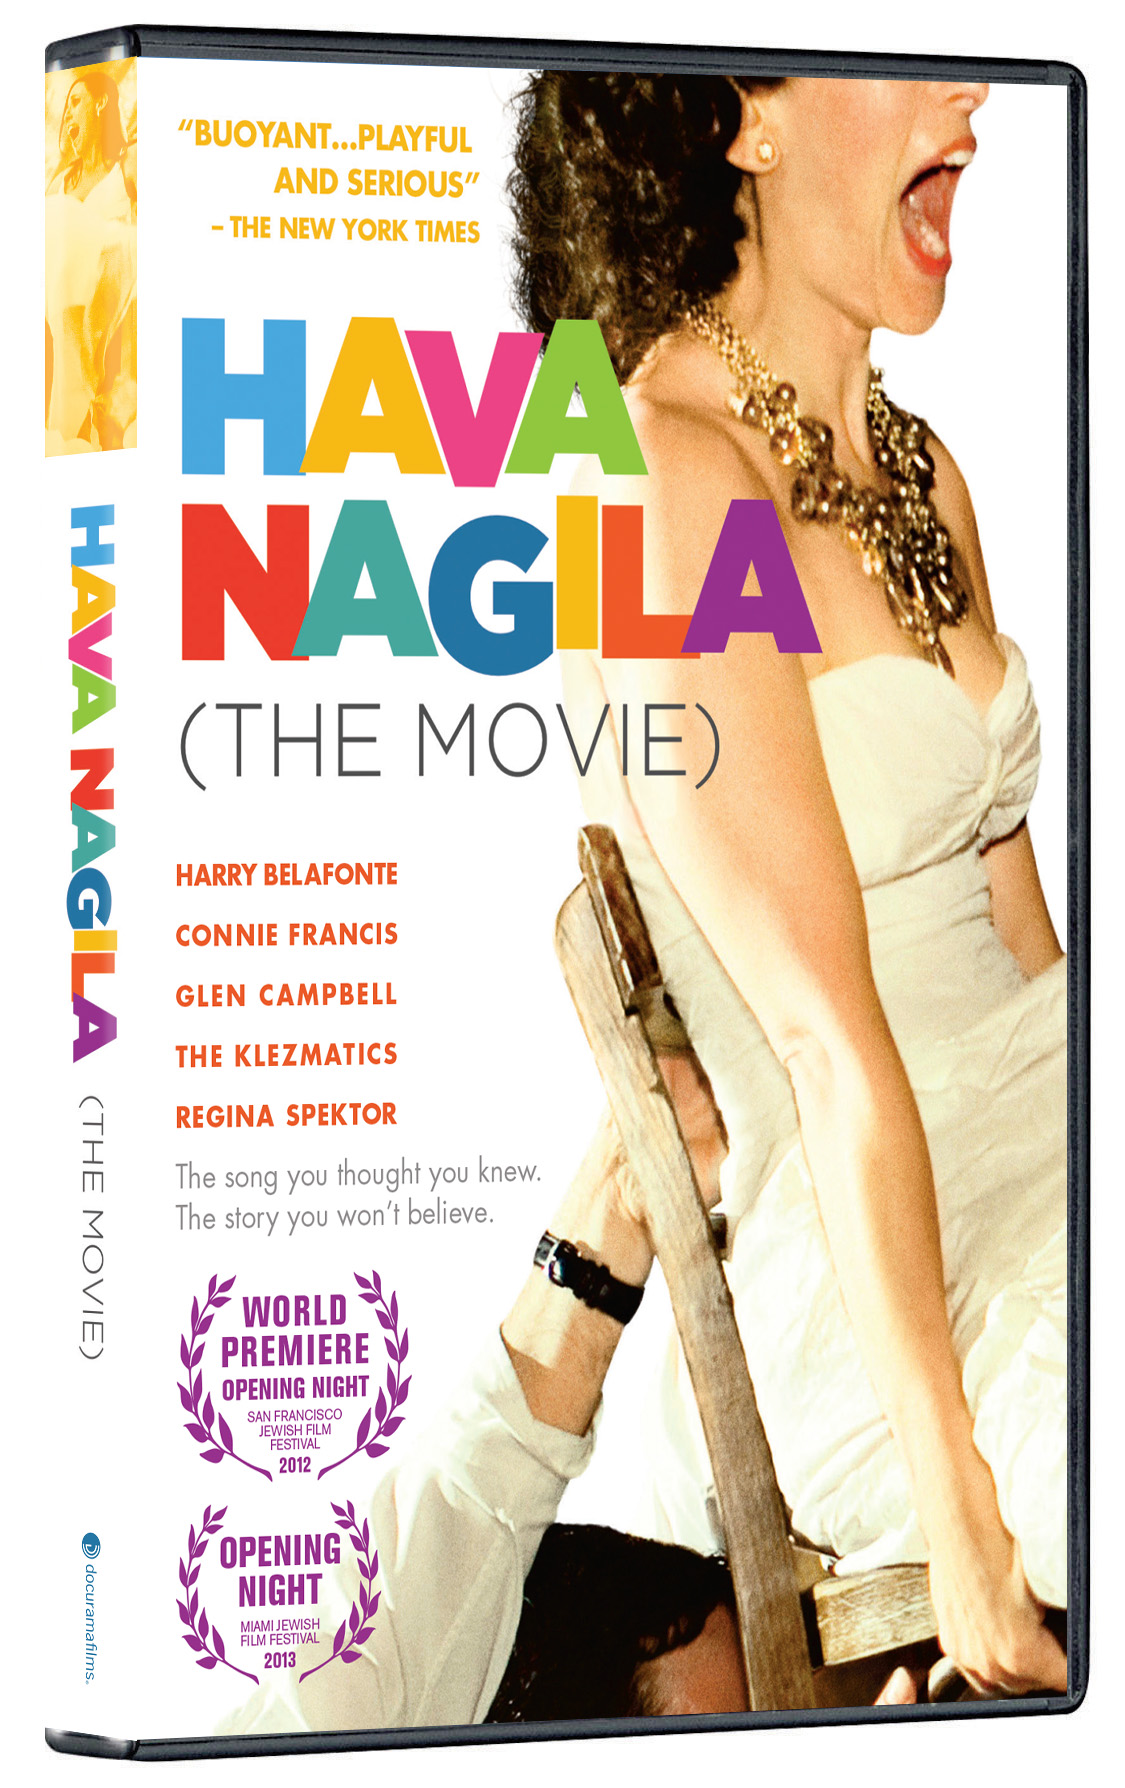 Hava Nagila: The Movie DVD Review